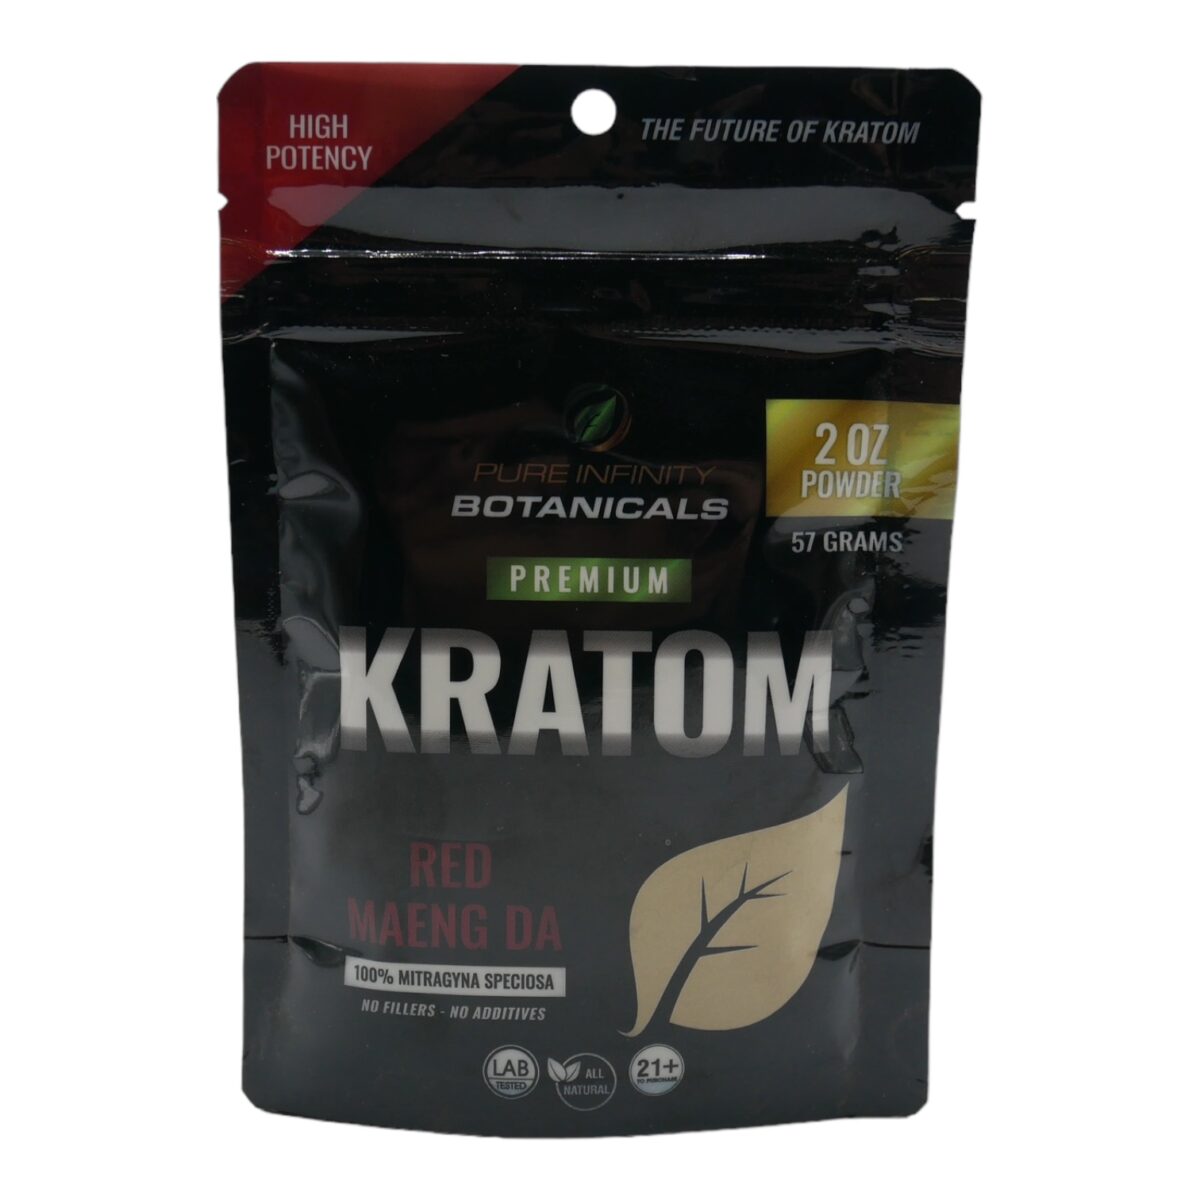 Pure Infinity Premium Kratom Red Maeng Da – Powder (57 Grams)